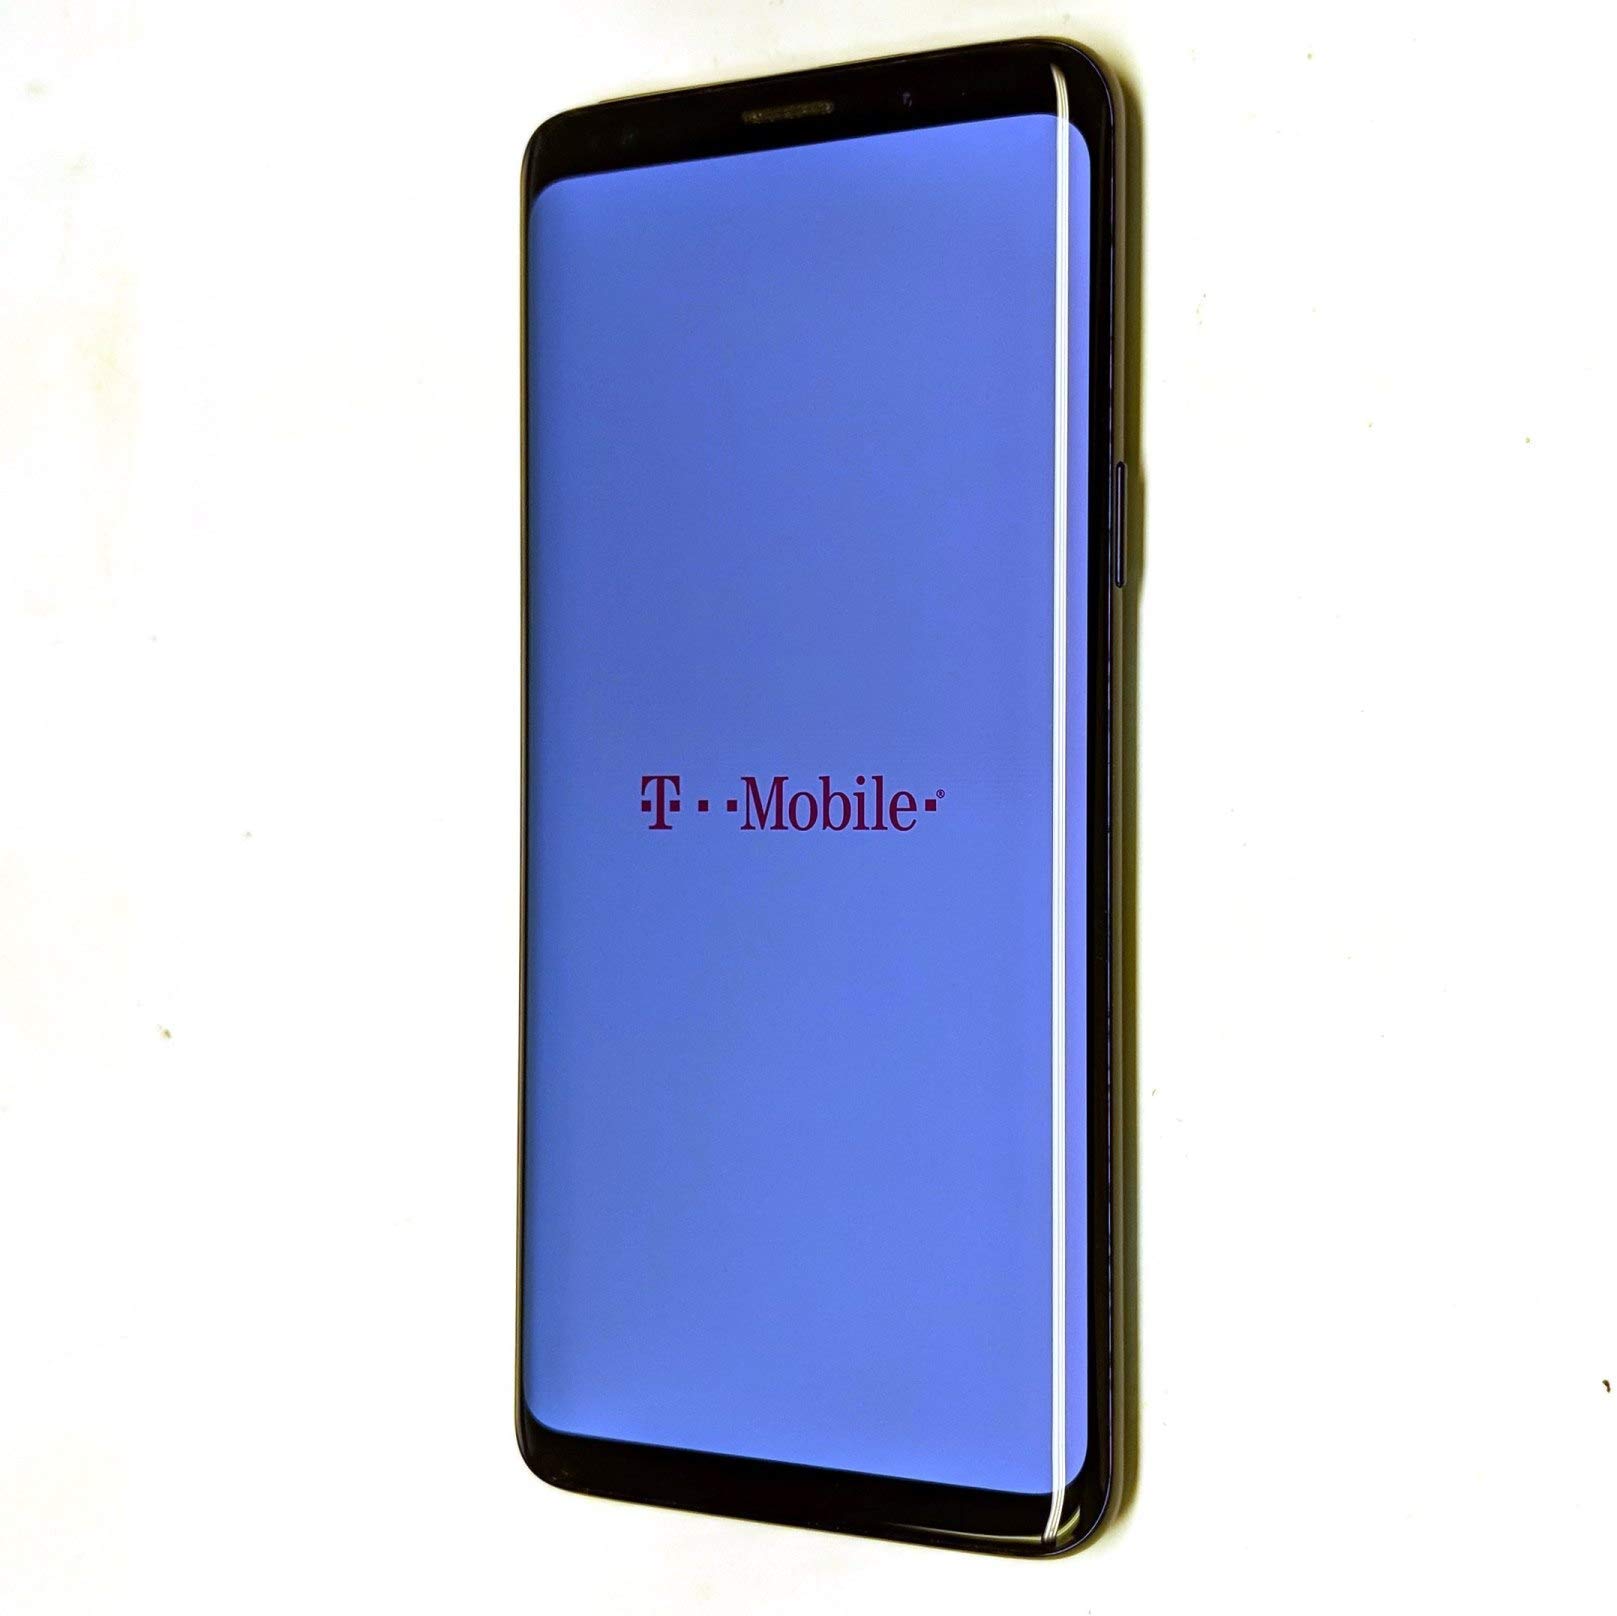 Samsung Galaxy S9, 64GB, Midnight Black - For GSM (Renewed)